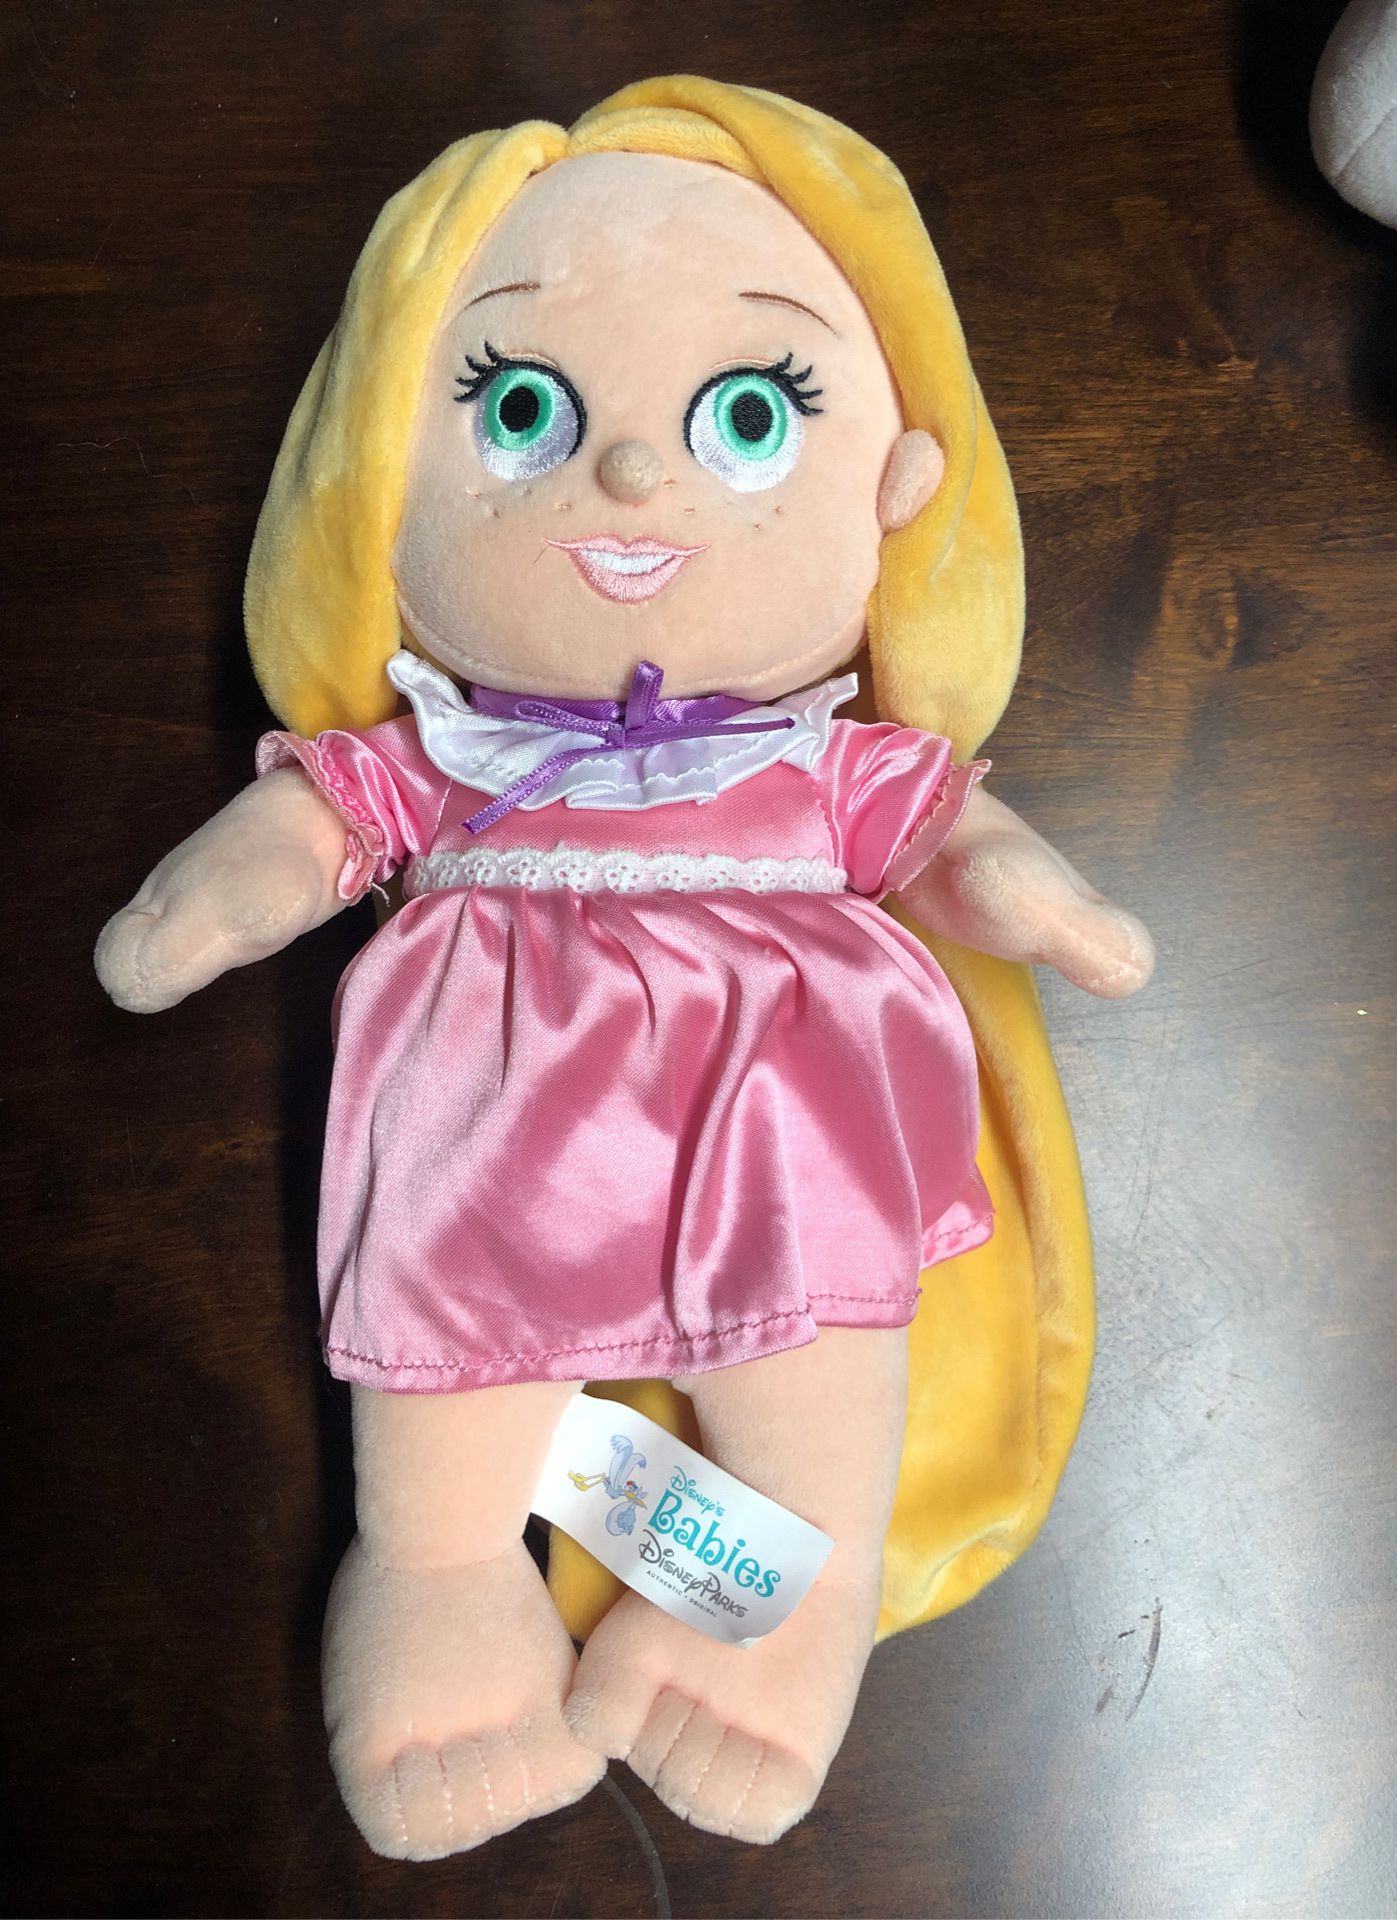 Disney Baby Rupunzel doll from Disneyland Park